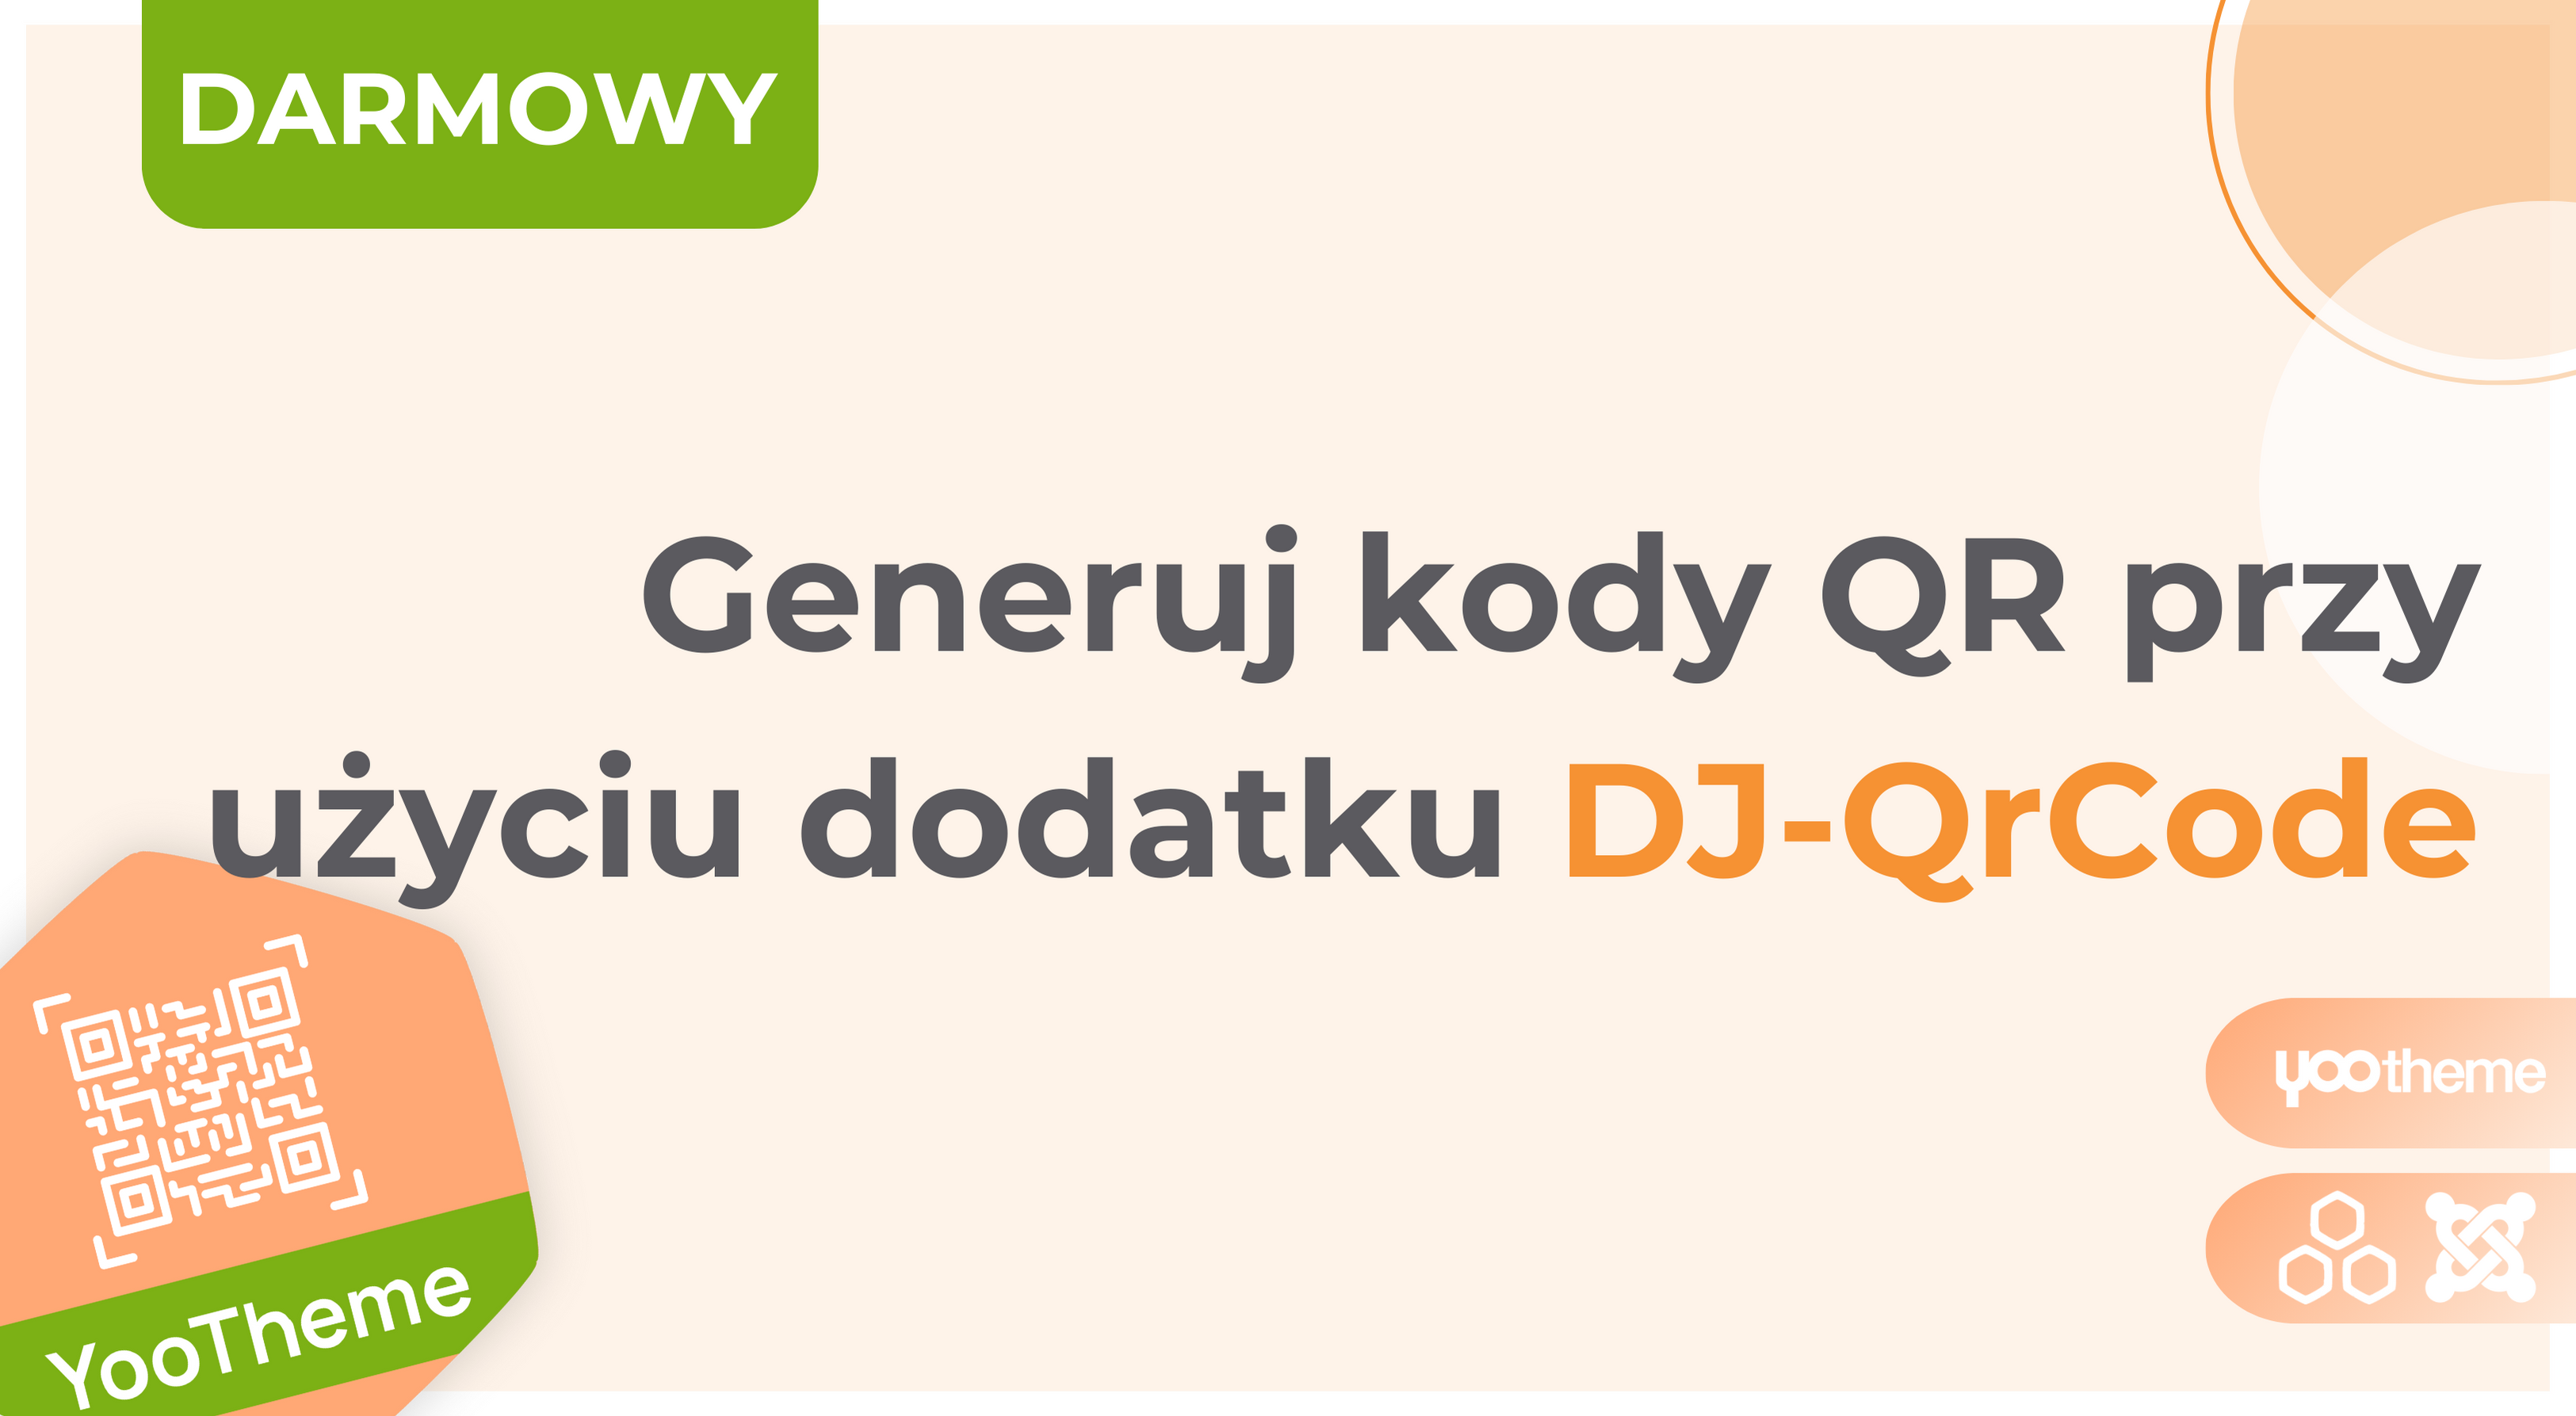 DJ-QrCode darmowy dodatek Joomla